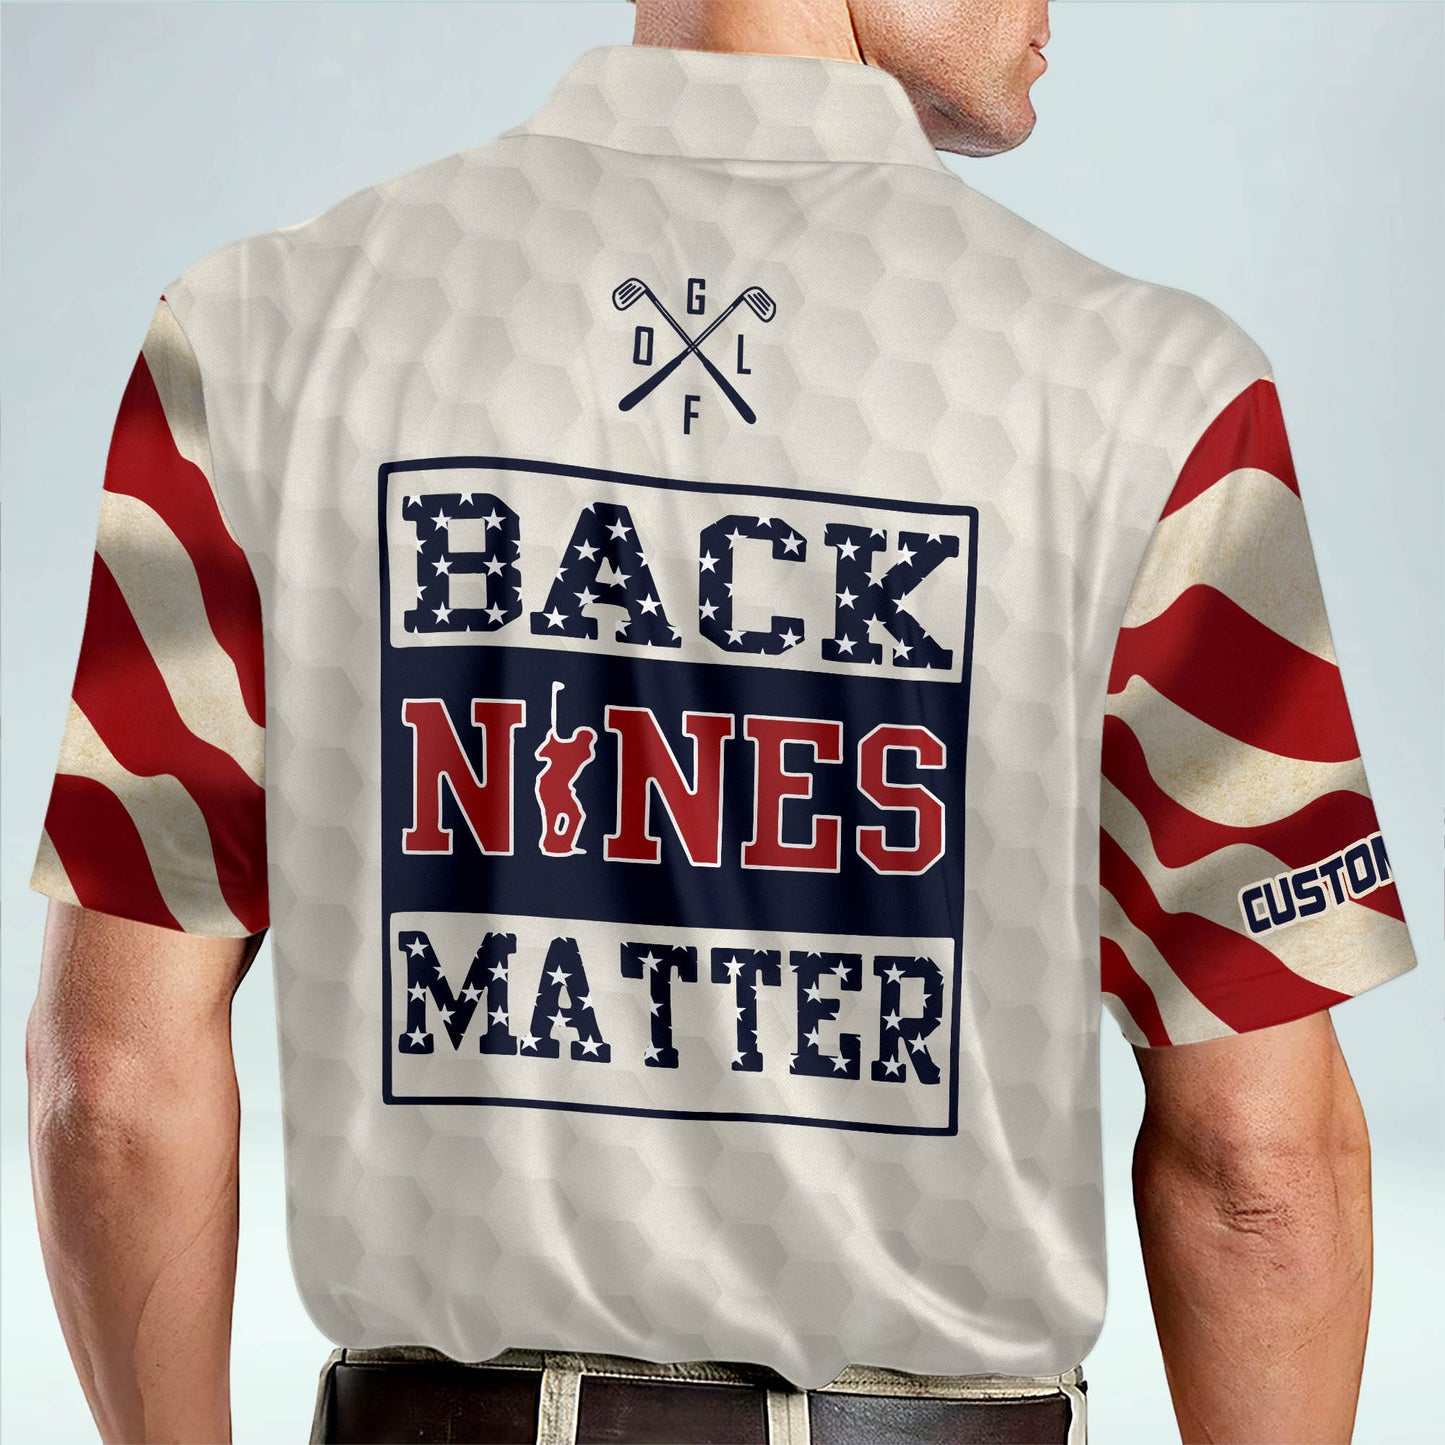 Back Nines Matter Golf Polo Shirt GM0382